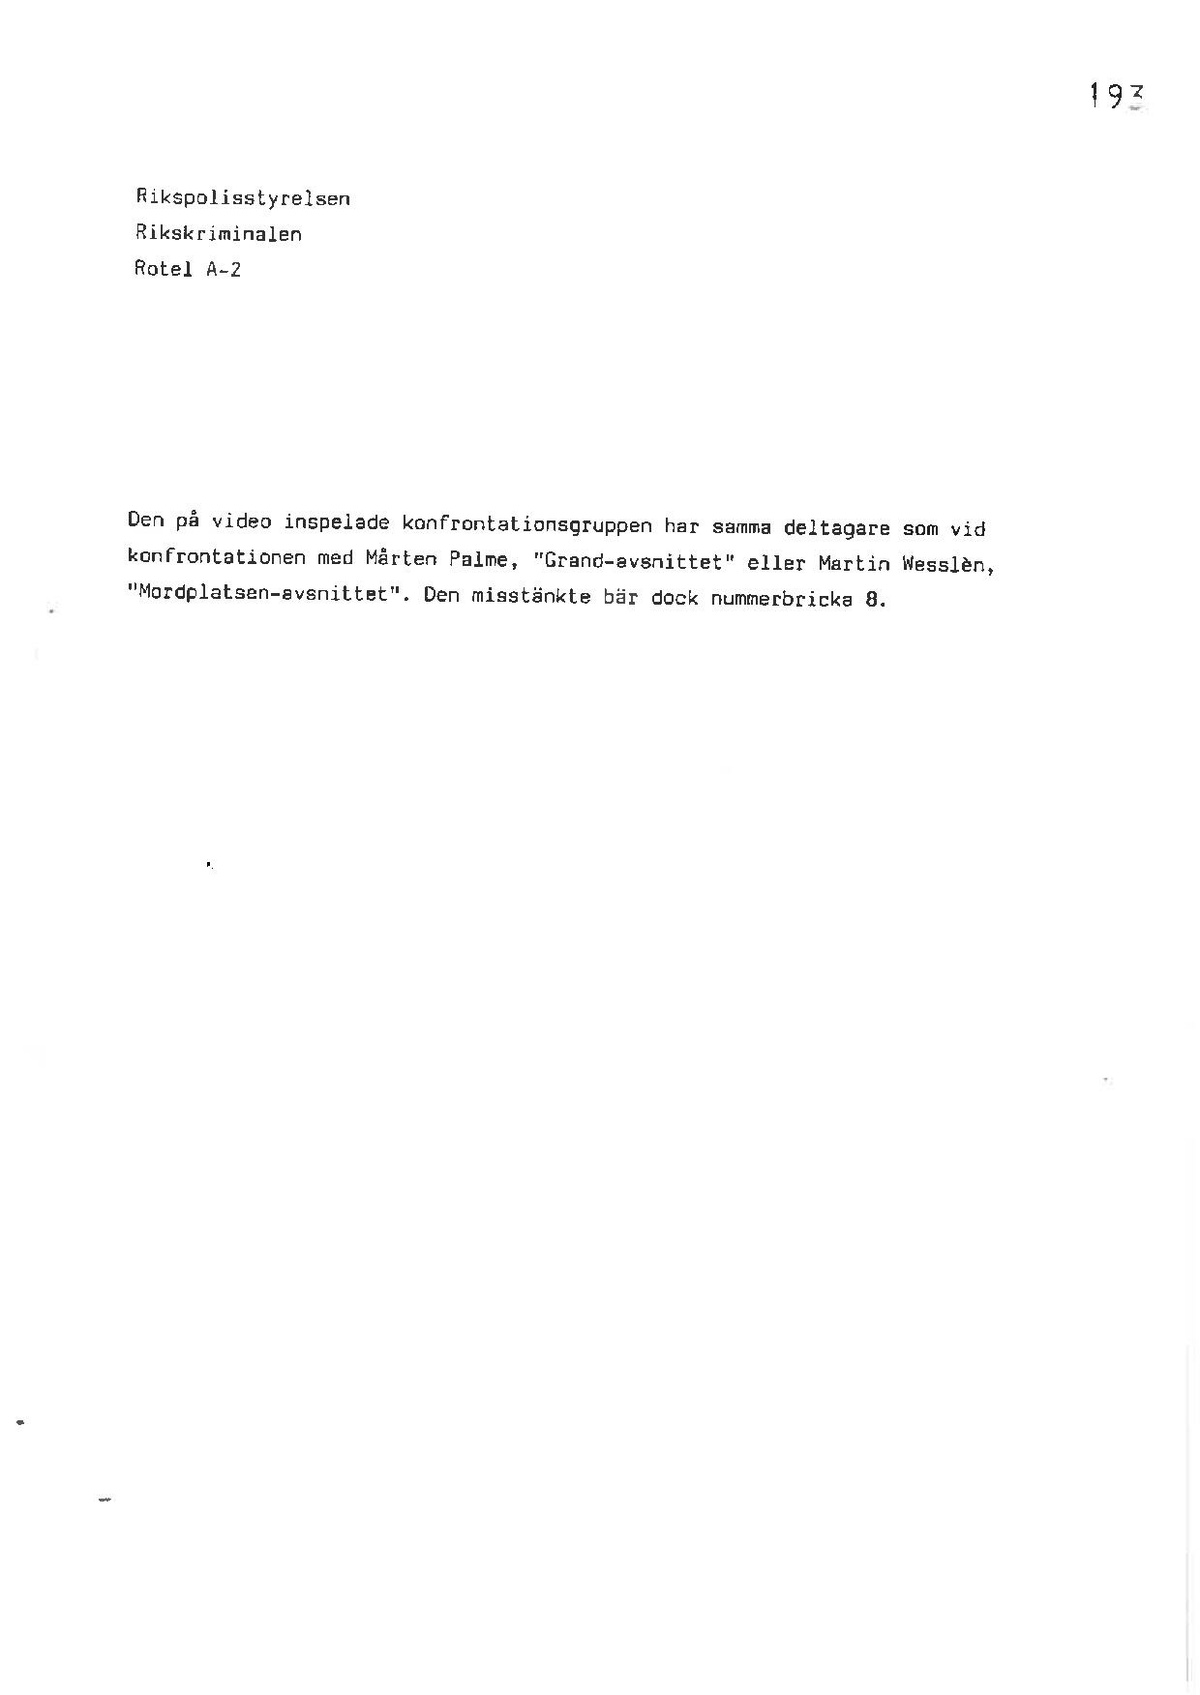 Pol-1986-05-15 1500 E9972-00-D VITTNESFÖRHÖR-Leif-Ljungqvist.pdf